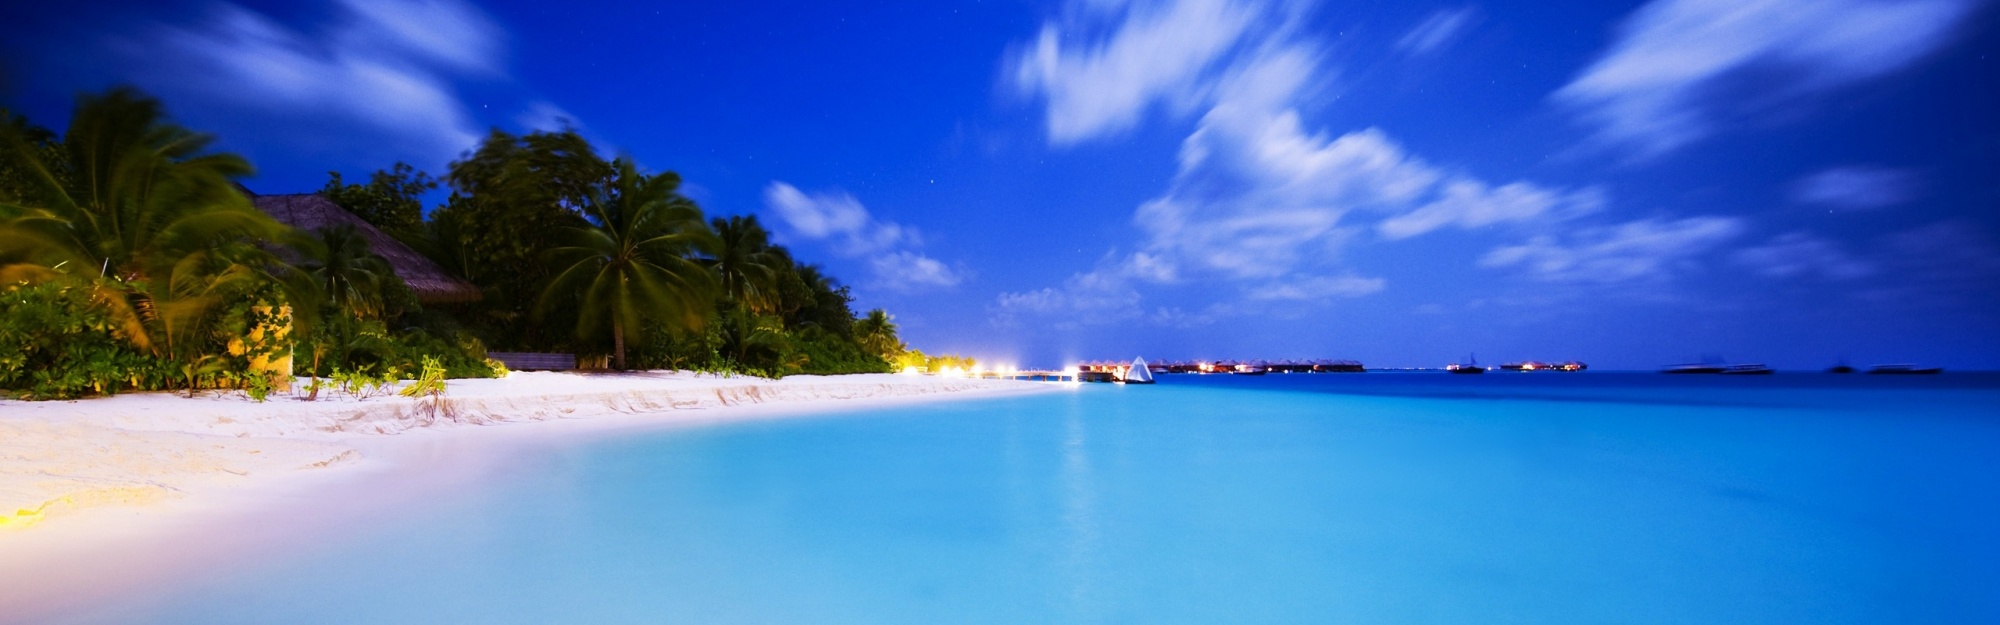 Maldives Night Island Beach Ocean Holiday Landscape